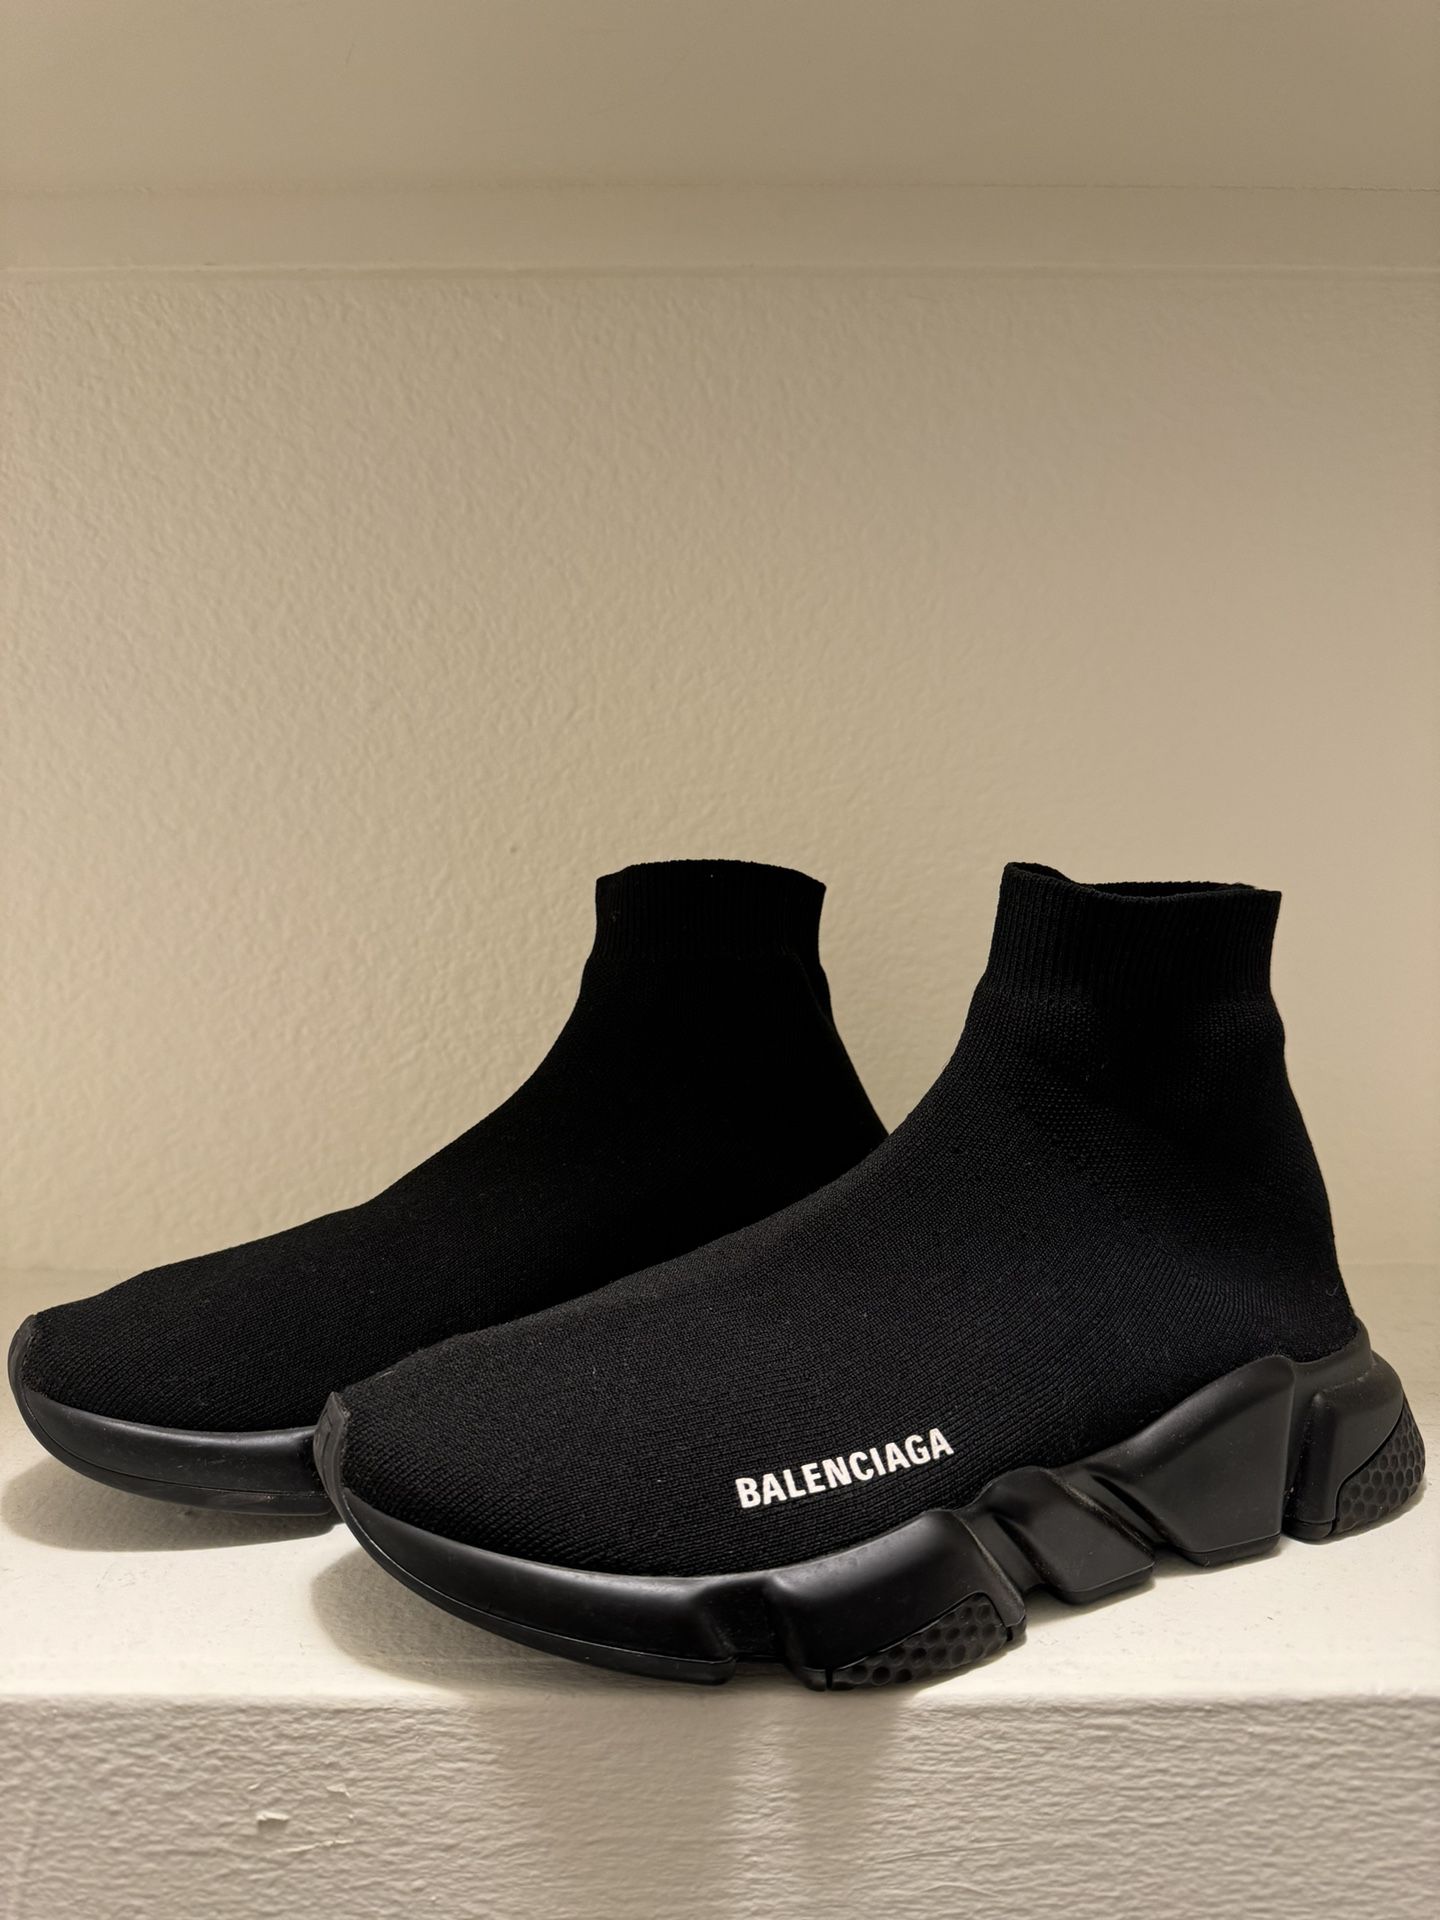 Speed LT Sock Sneaker (Men) Balenciaga 8 US (Slightly Worn)